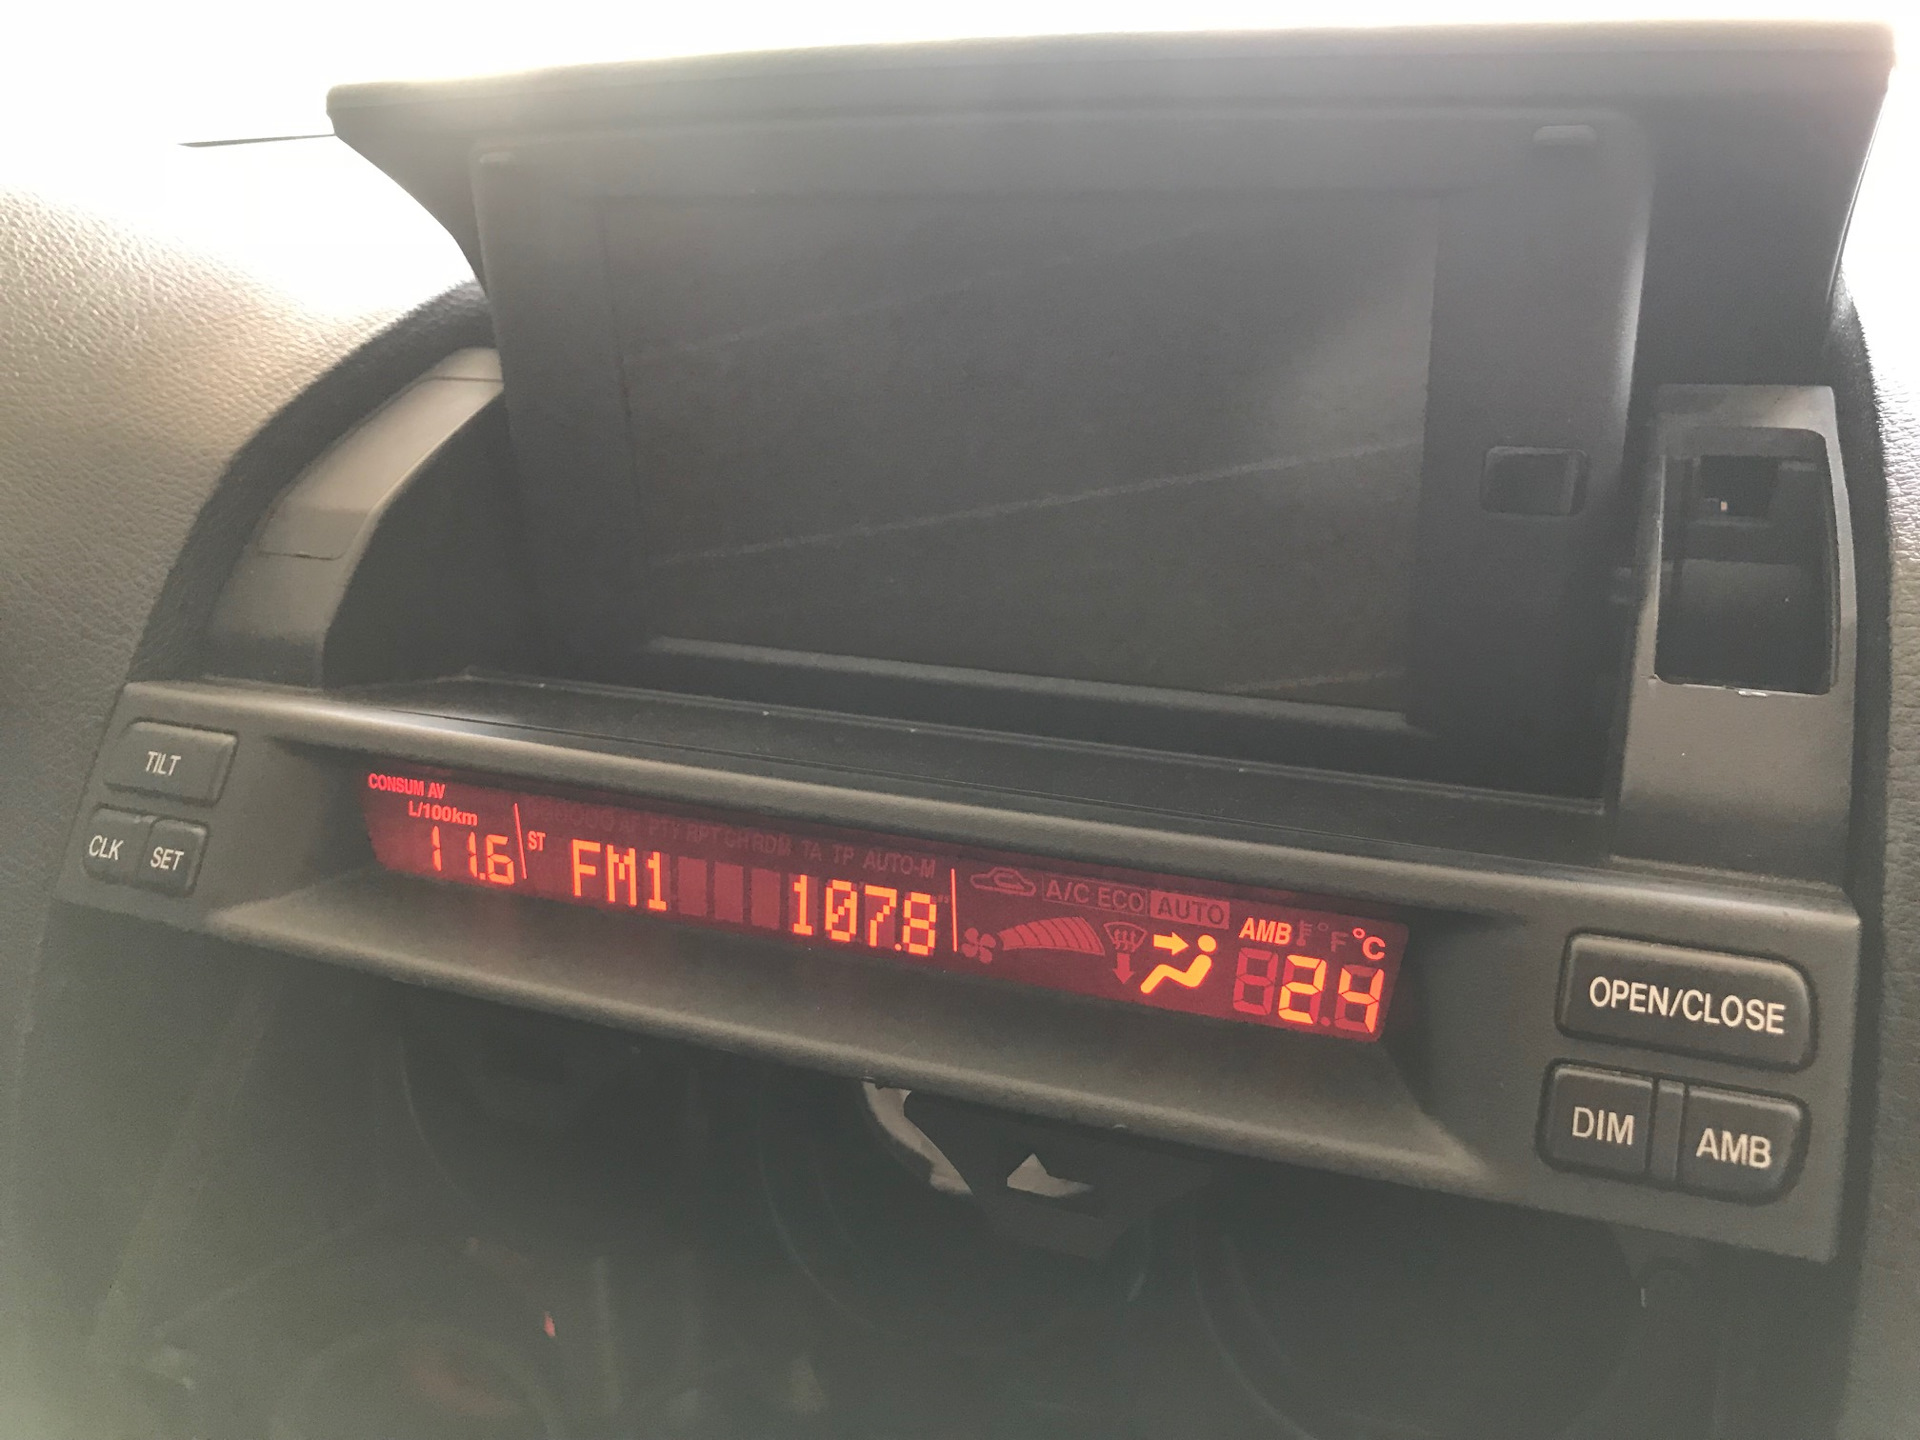 Экран мазда 6. Mazda 6 gg информационный дисплей. Mazda 6 gg штатный монитор. Информационный дисплей Мазда 6 Atenza gg. Информативный дисплей Мазда 6 gg Рестайлинг.